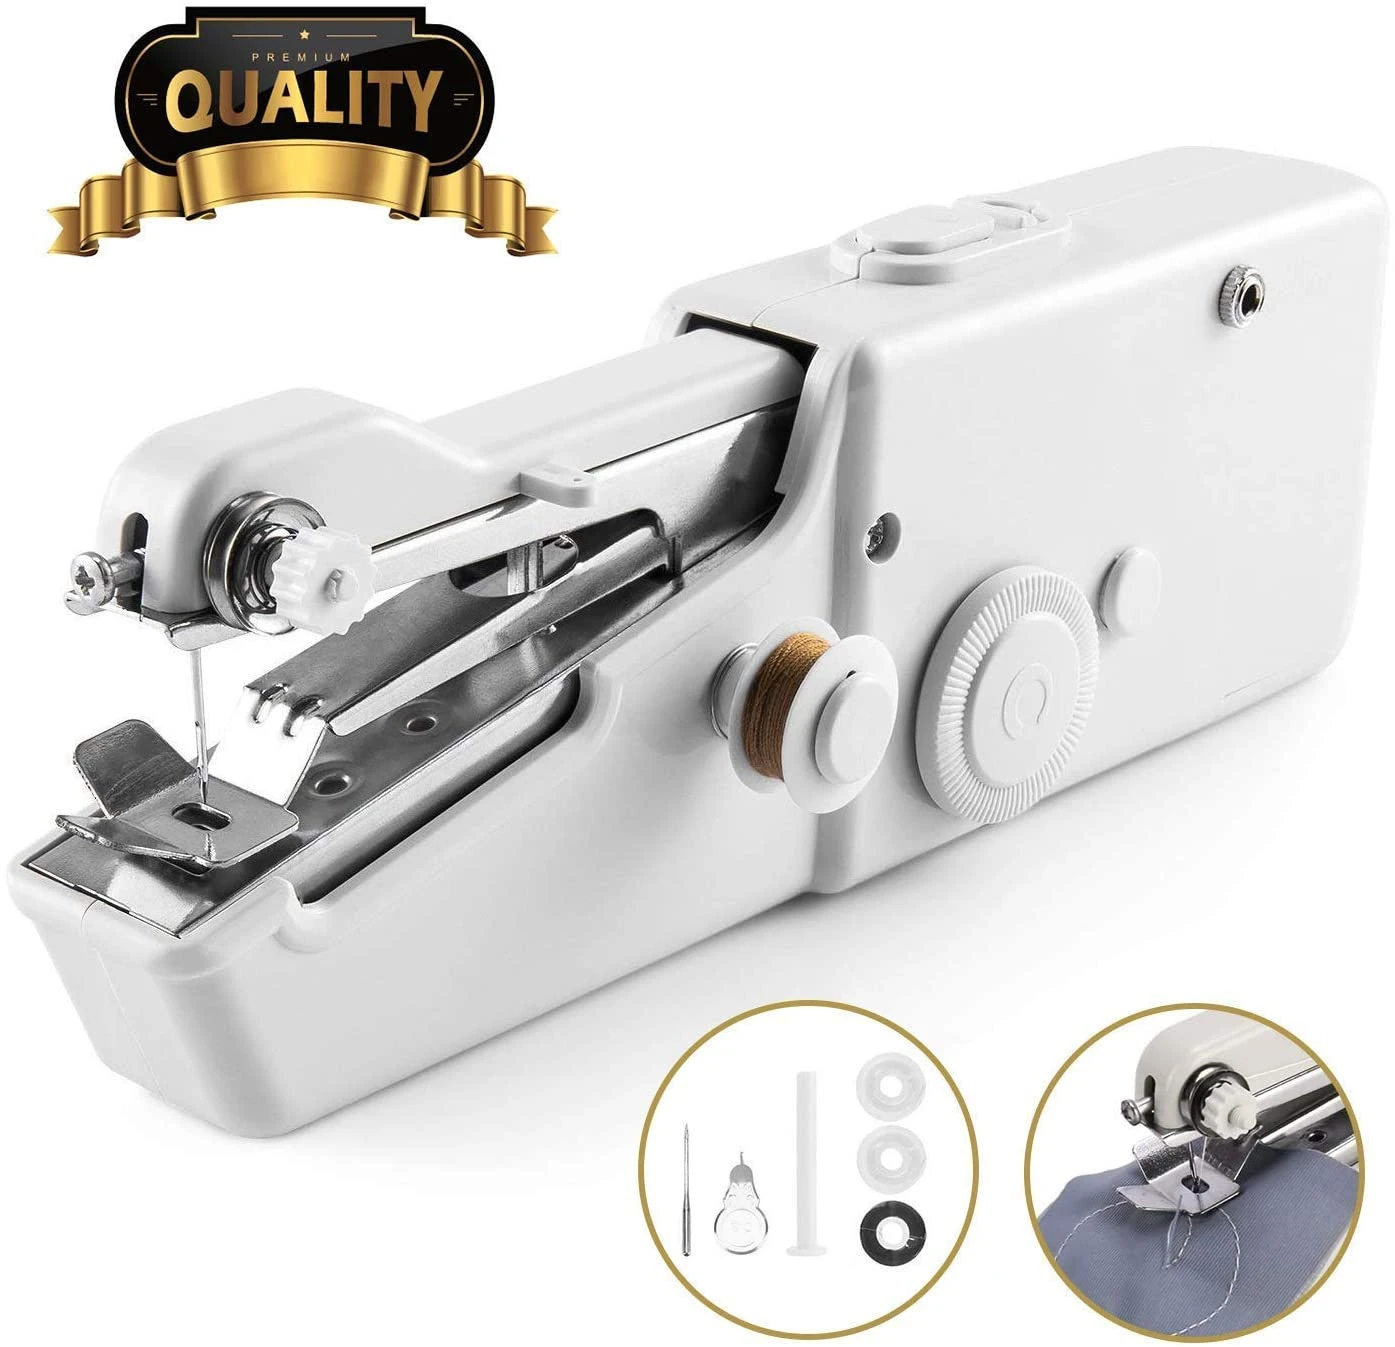 New Product 2020 Overlock Sewing Machine Hand Handheld Sewing Machine For Household